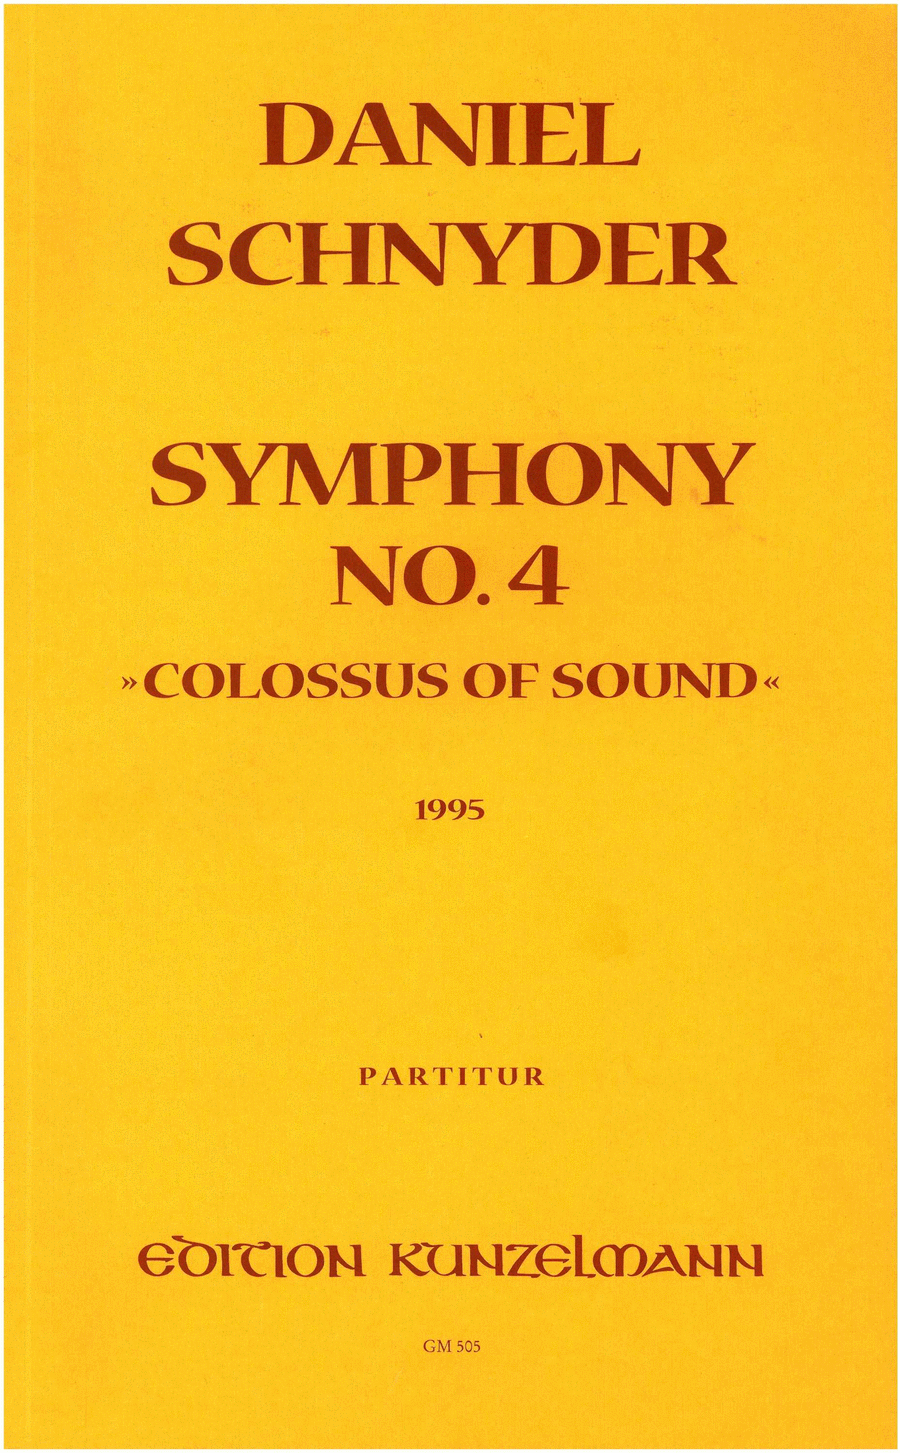 Symphony no. 4 